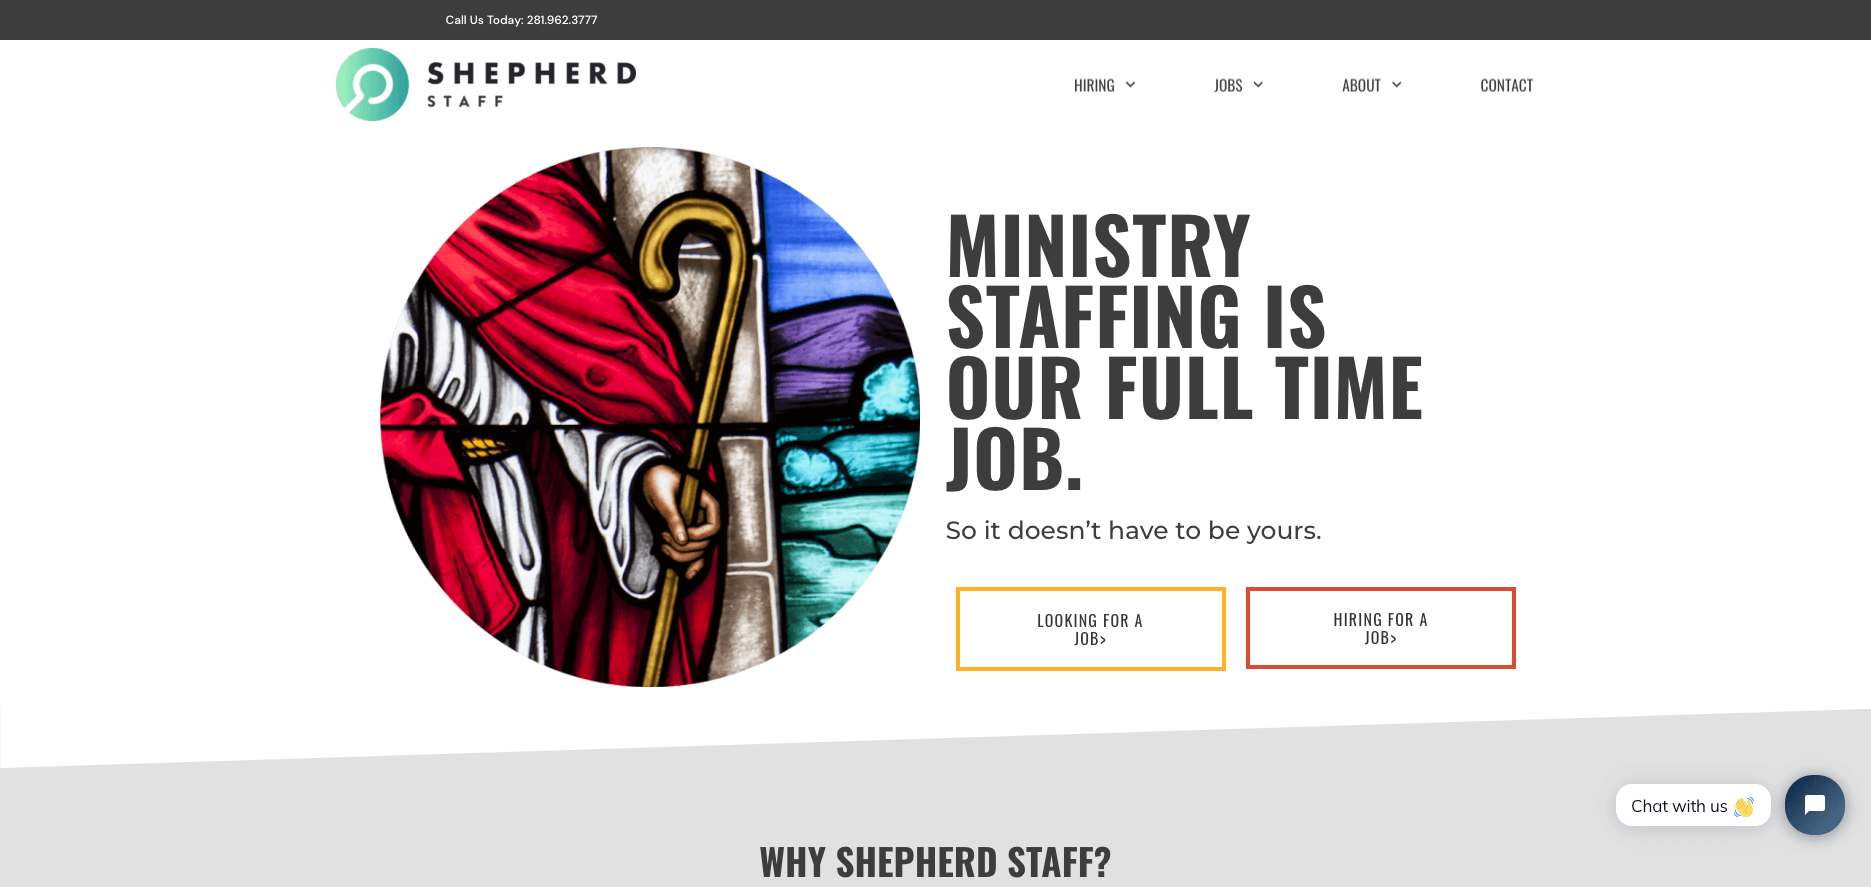 Shepherd Staff